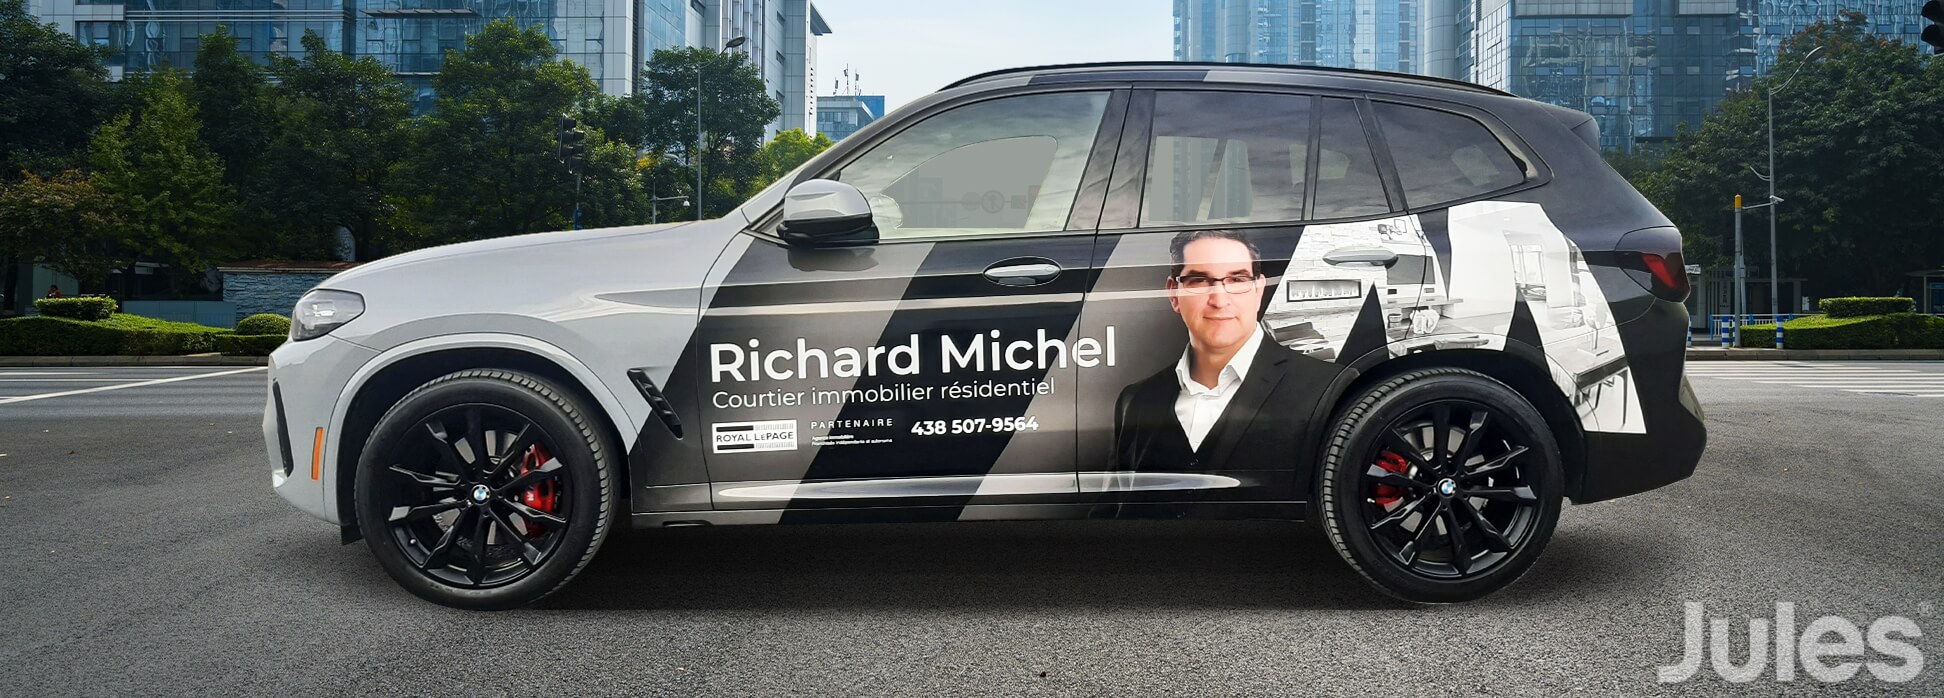 ROYAL LEPAGE RICHARD MICHEL LETTRAGE BMW X3 WRAP COURTIER IMMOBILIER RESIDENTIEL